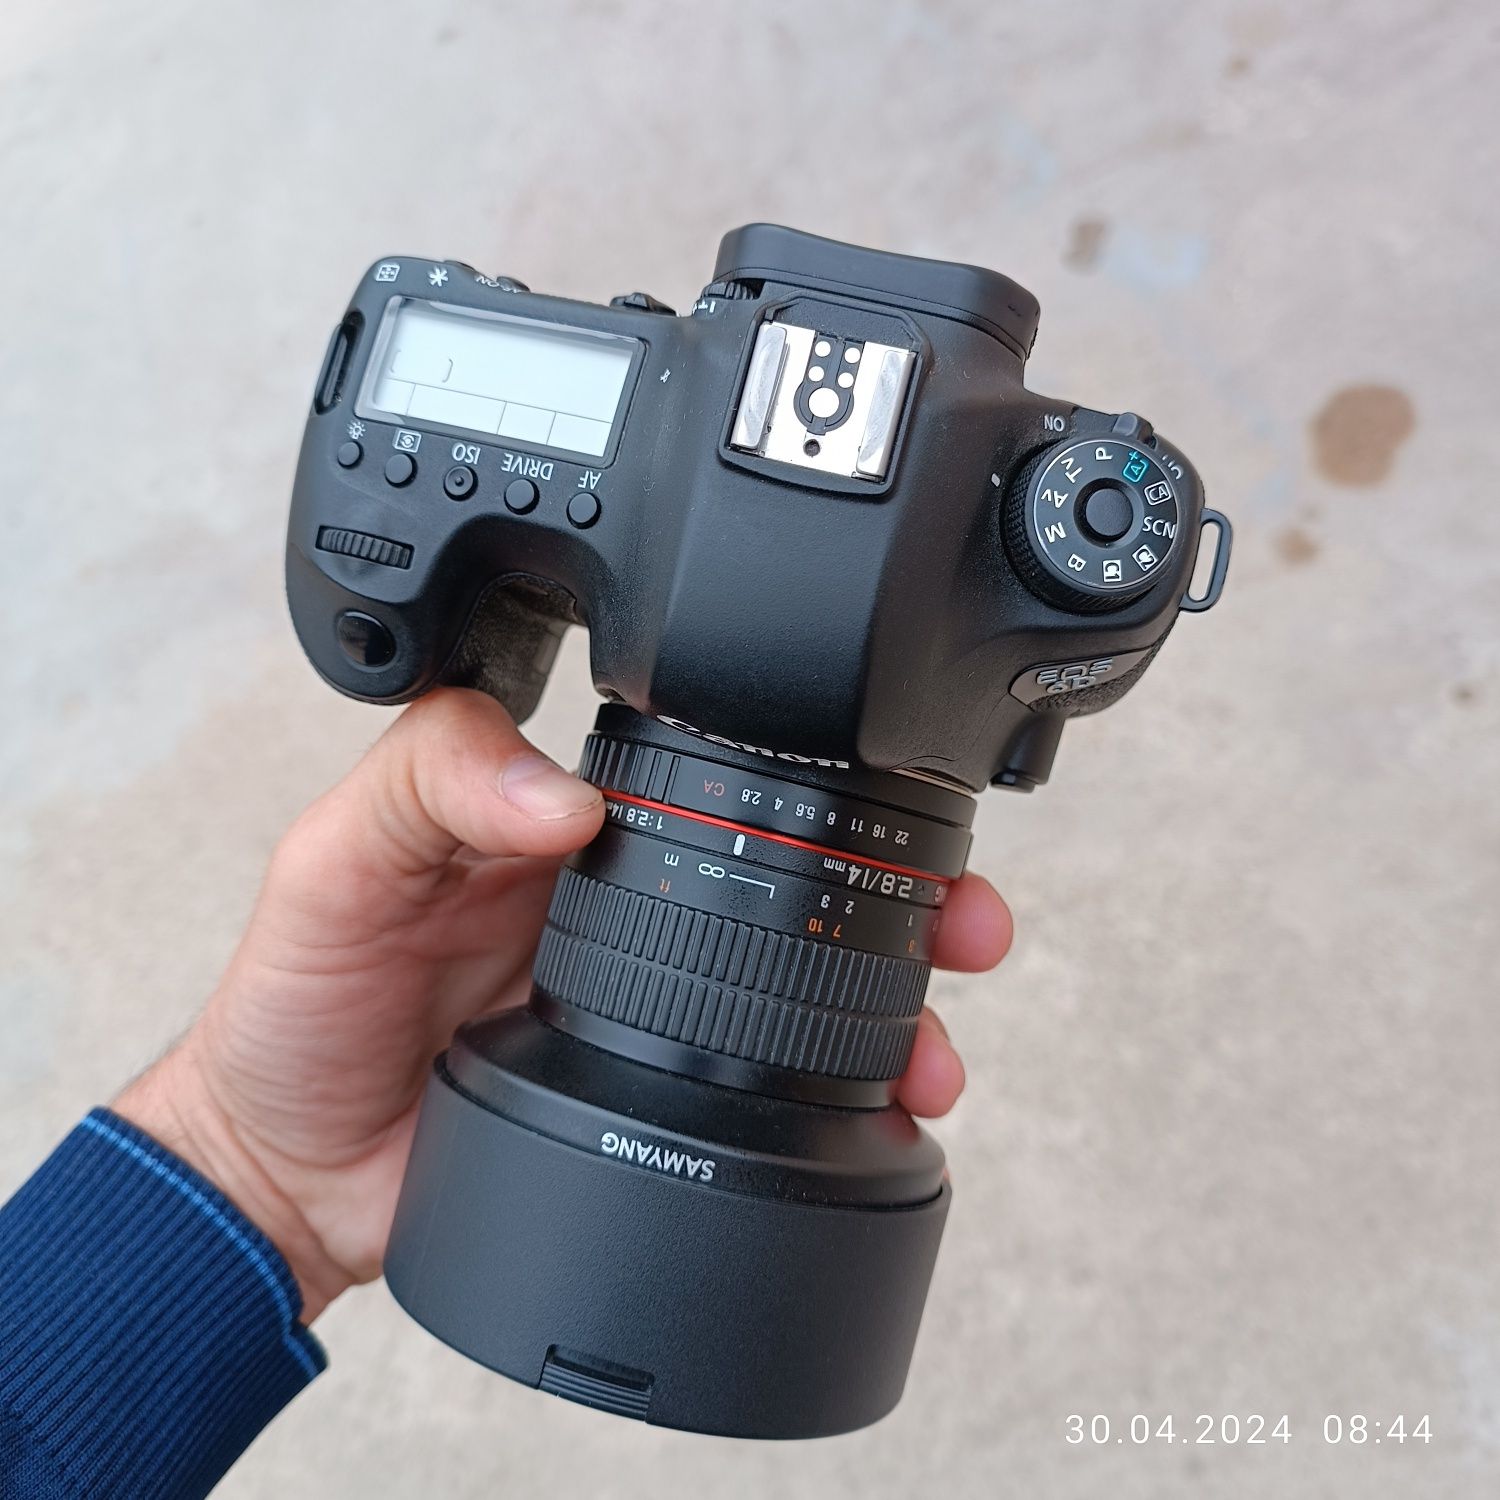 Canon 6D + Samyang 14 mm